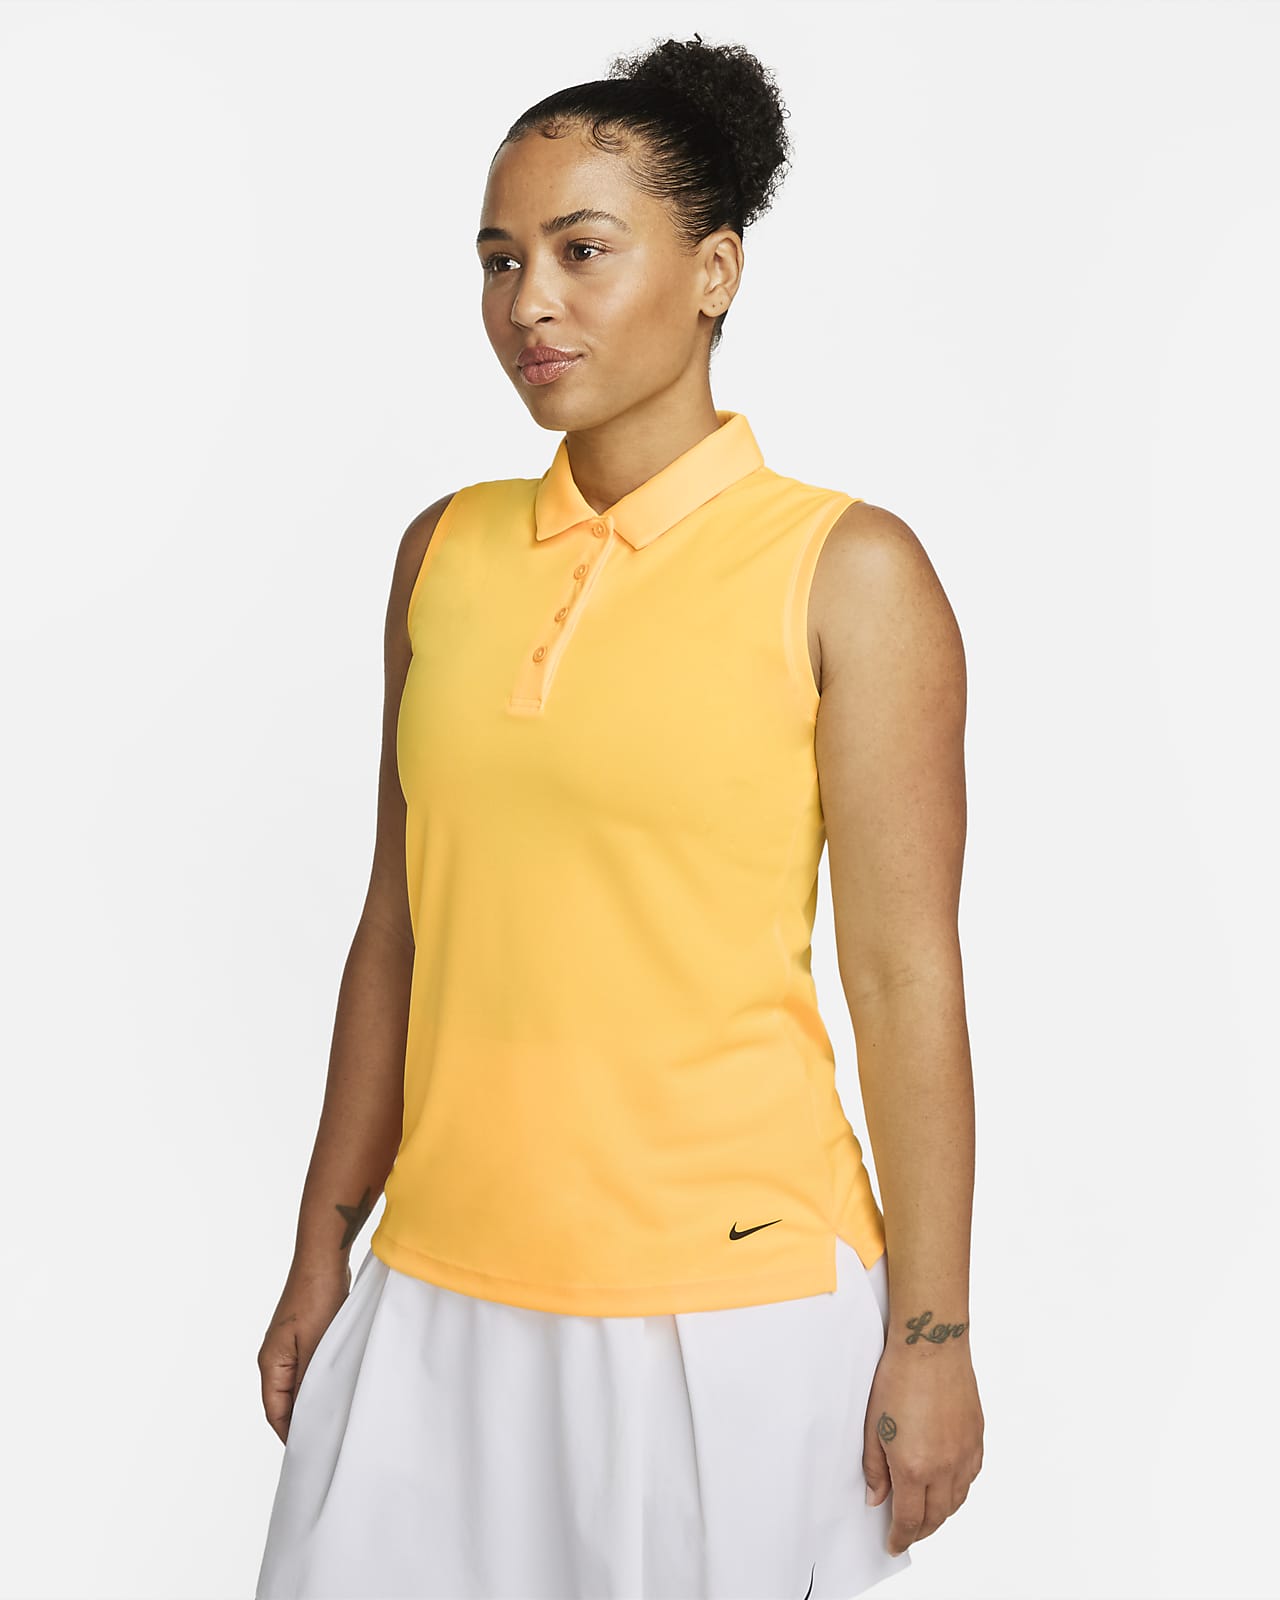 Nike Dri-FIT Victory Women's Sleeveless Polo.